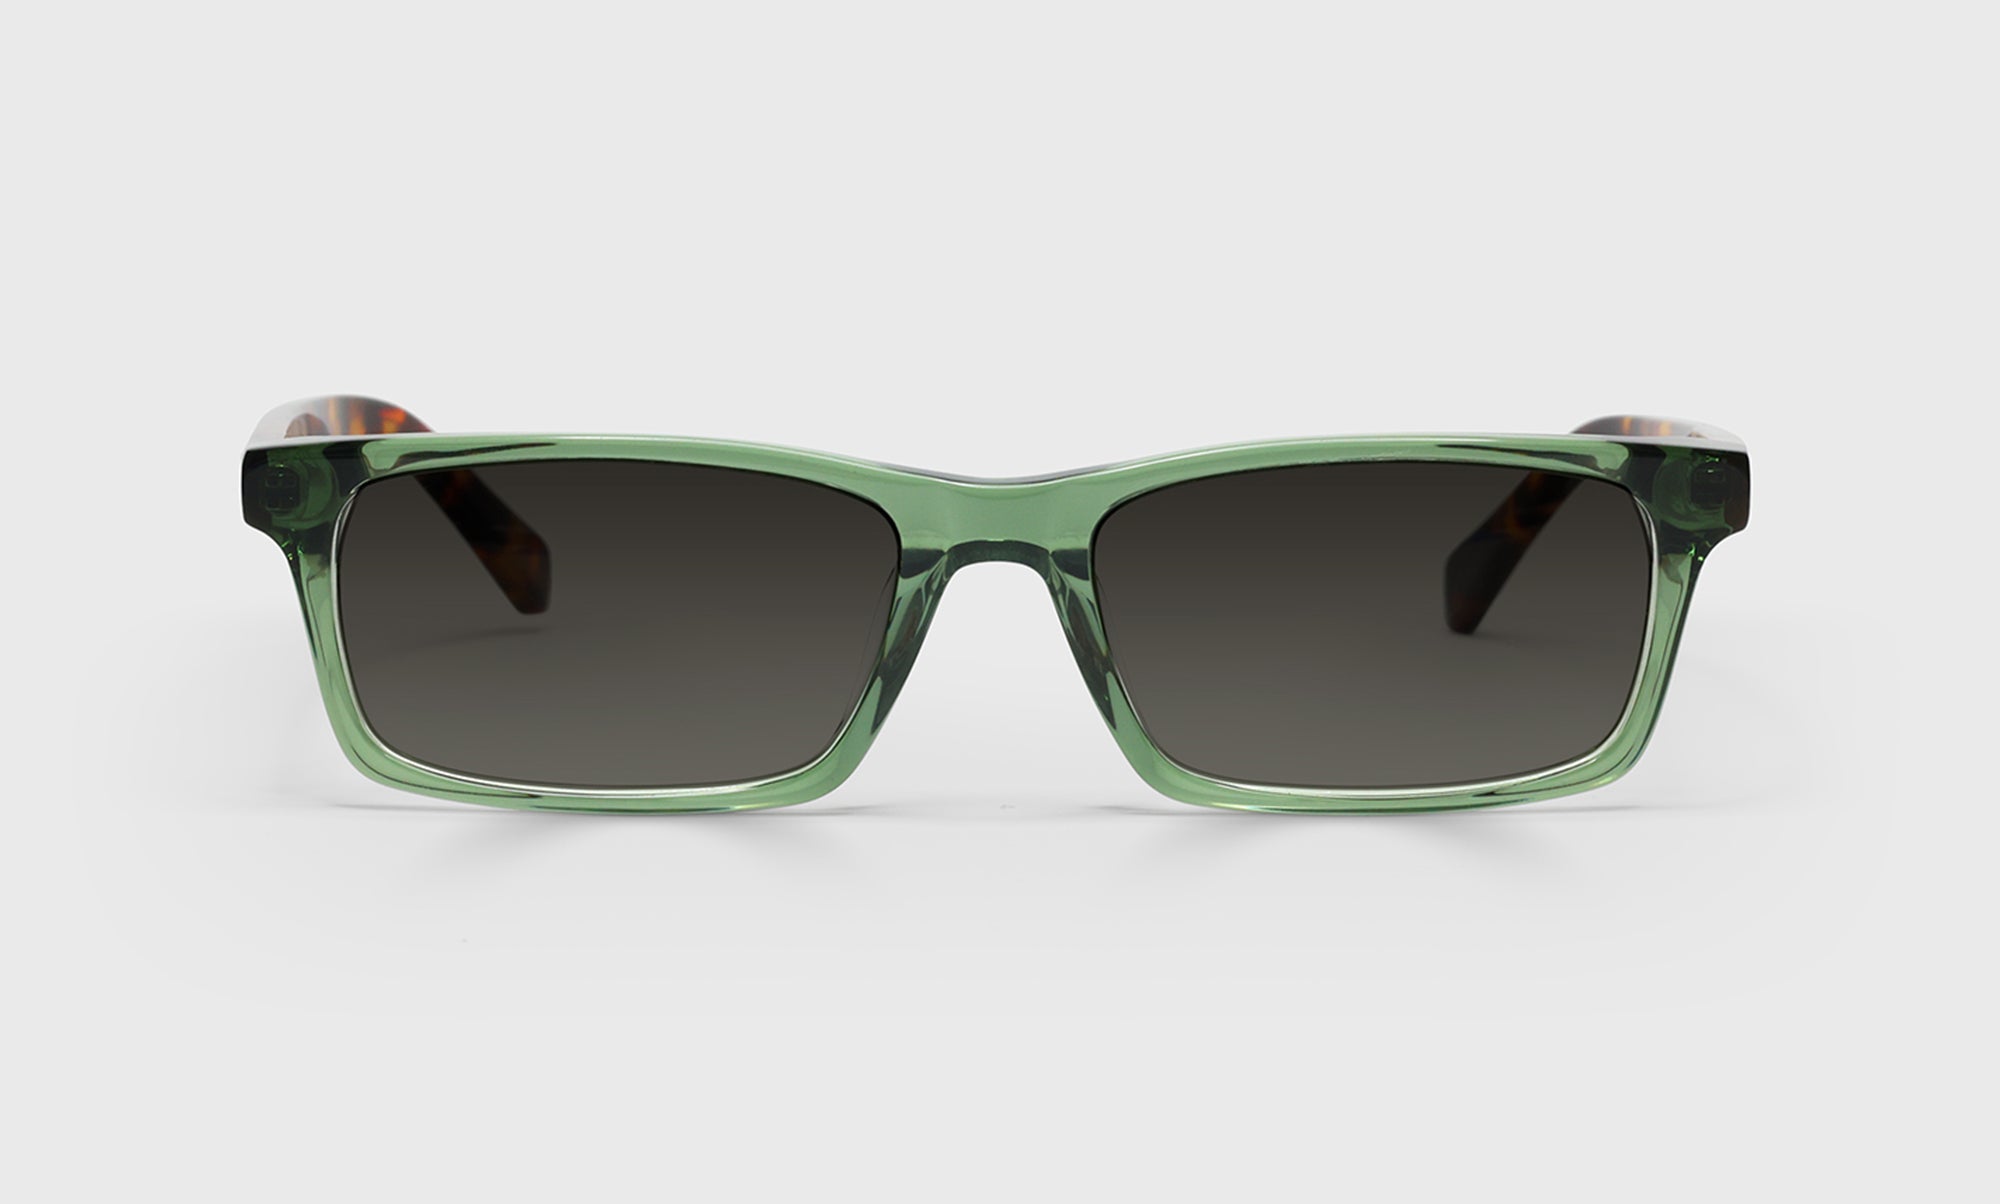 17-pg, 17-rs | eyebobs premium designer number cruncher readers, blue light and prescription glasses in green crystal, polarized grey